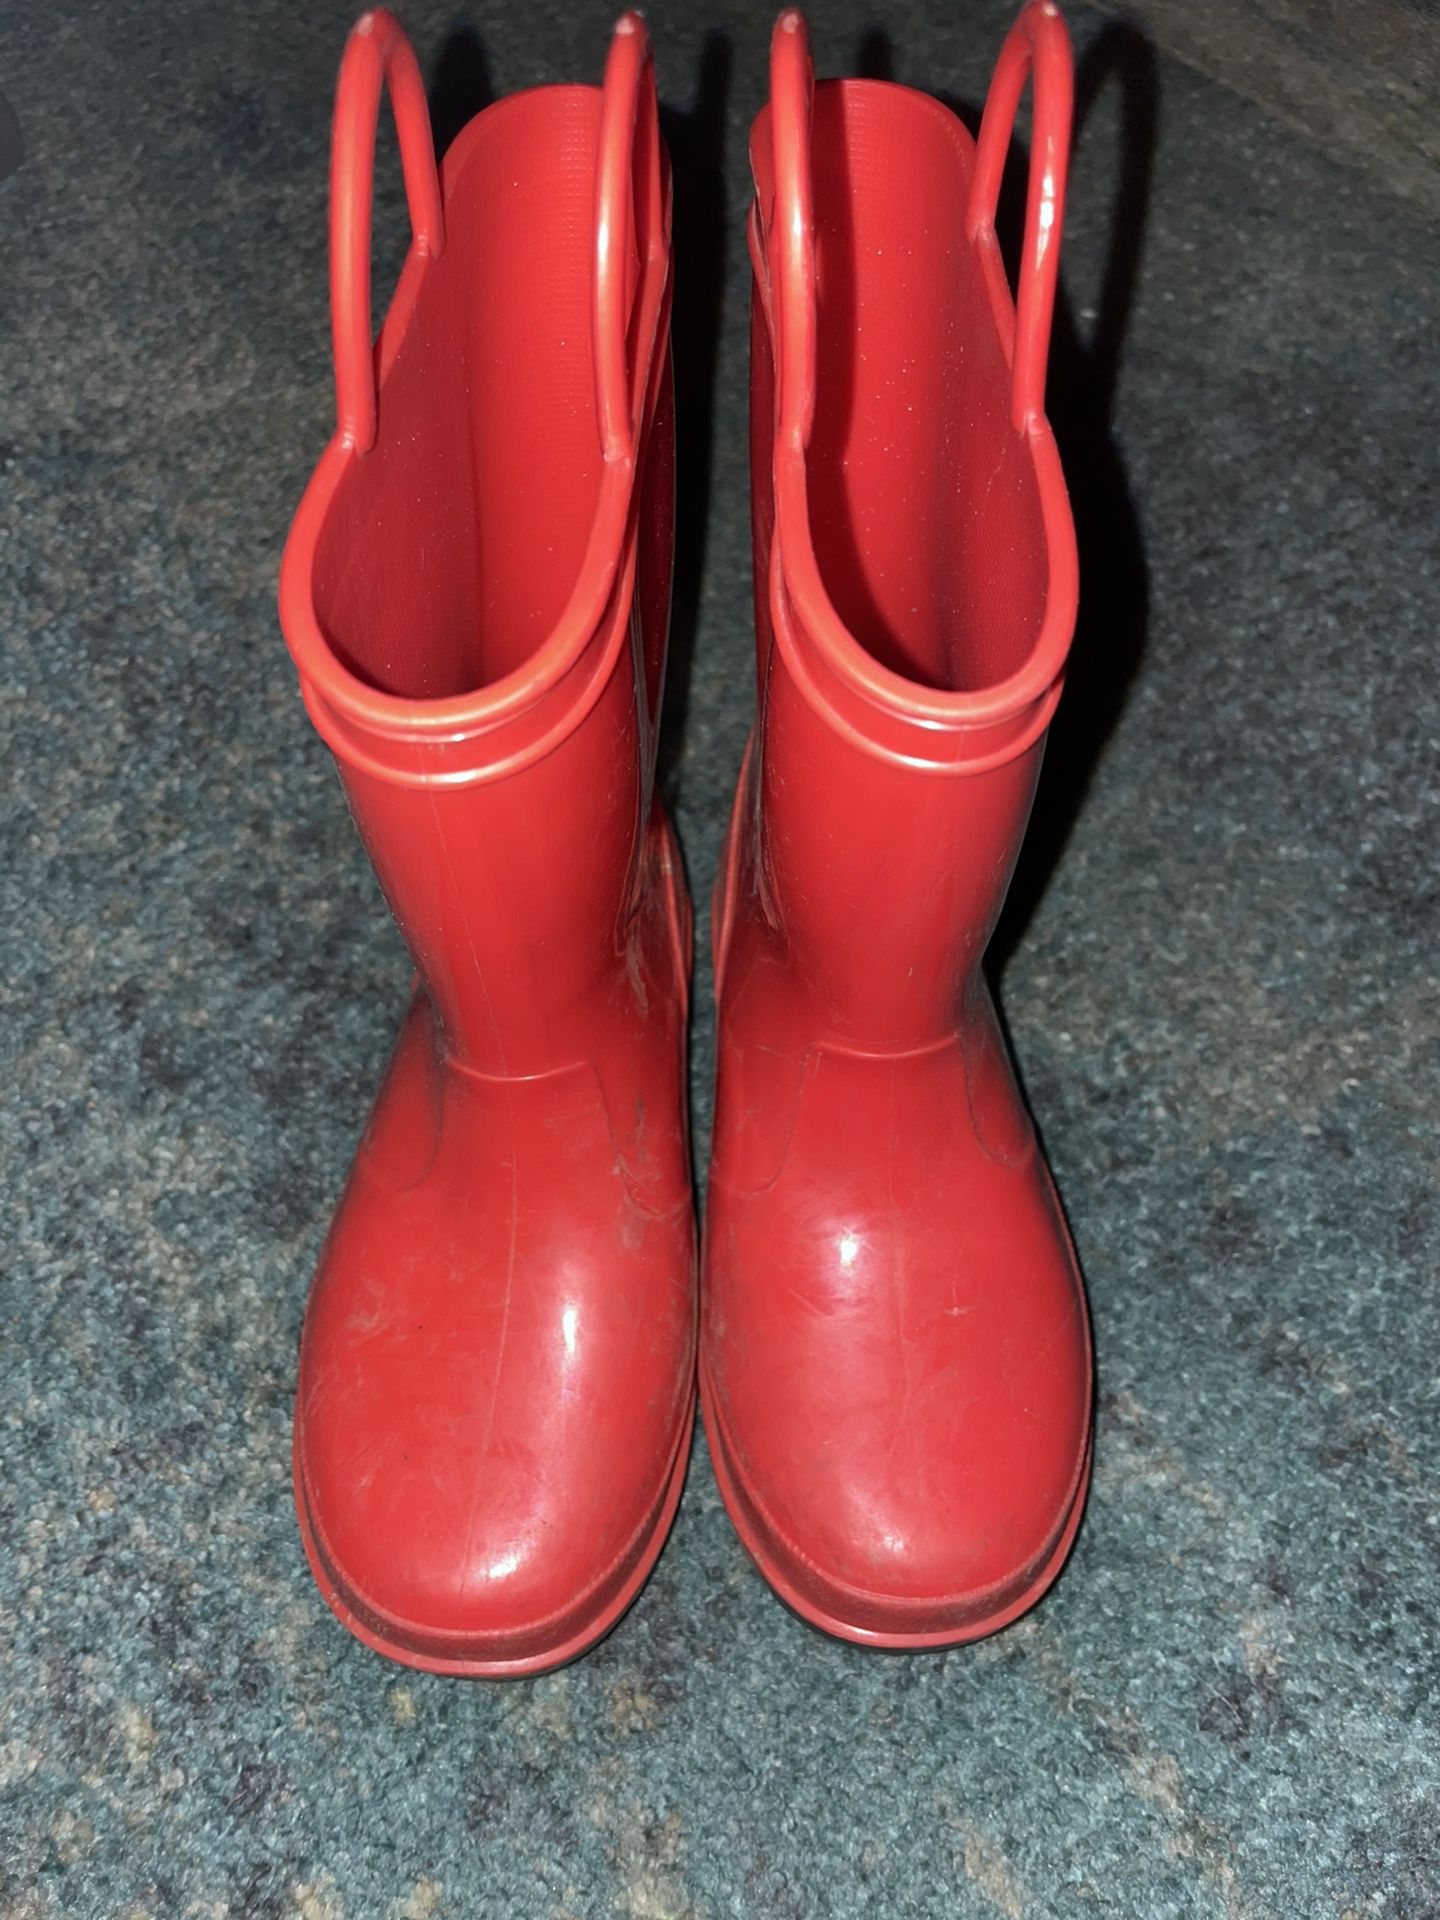 Kids Rain Boots Size 10c